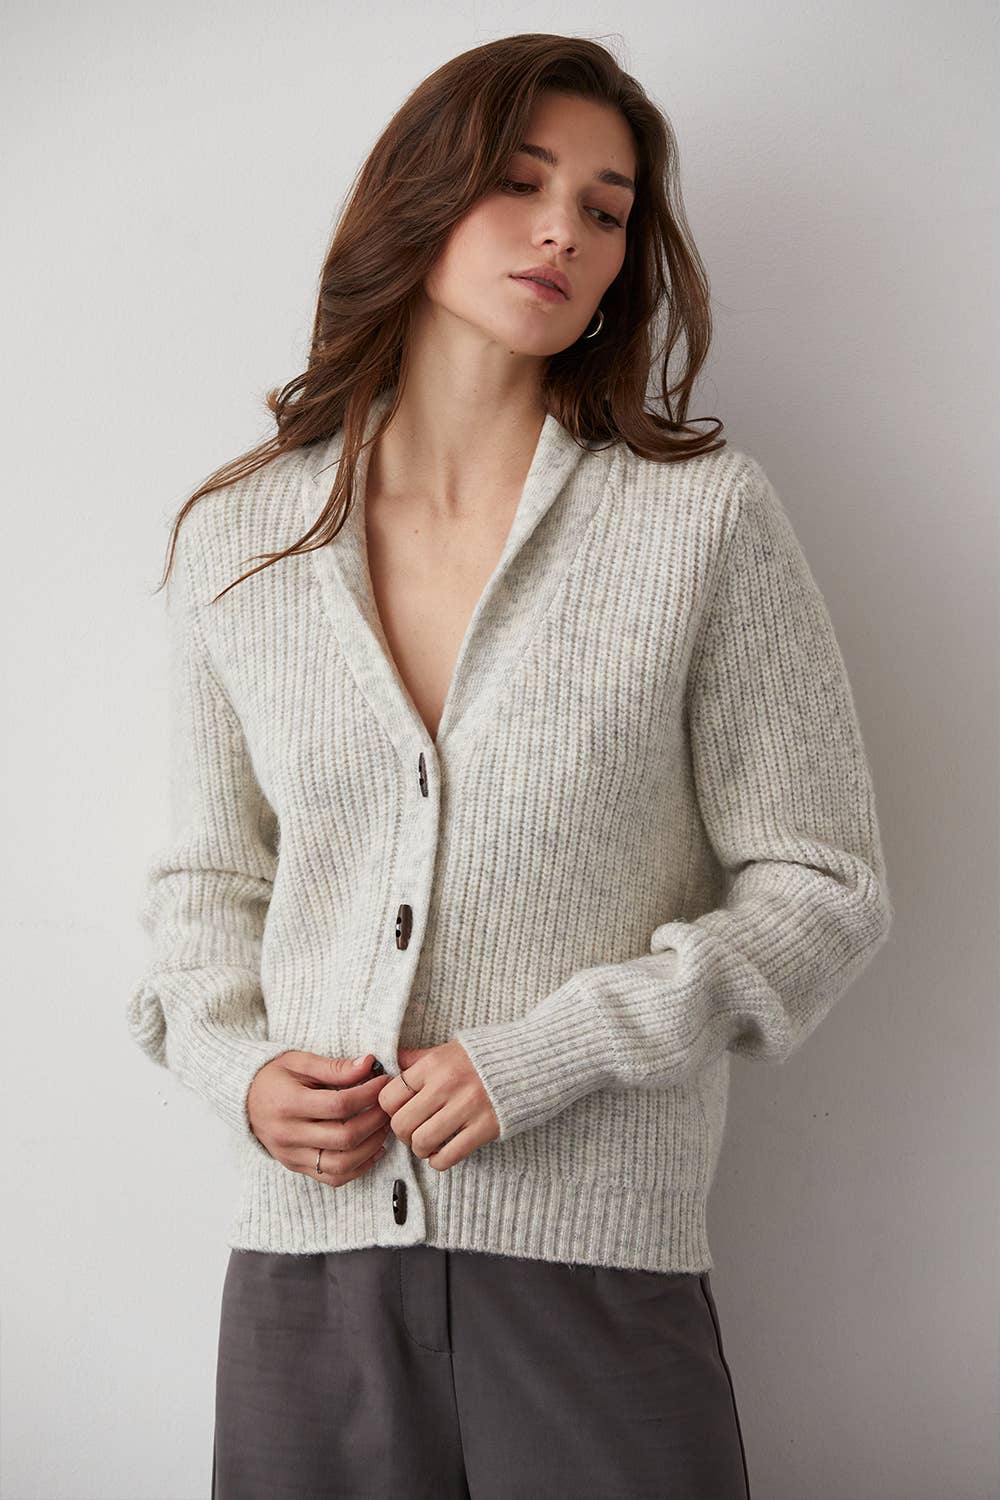 Heather Gray Shawl Neck Sweater Cardigan - Abigail Fox Designs